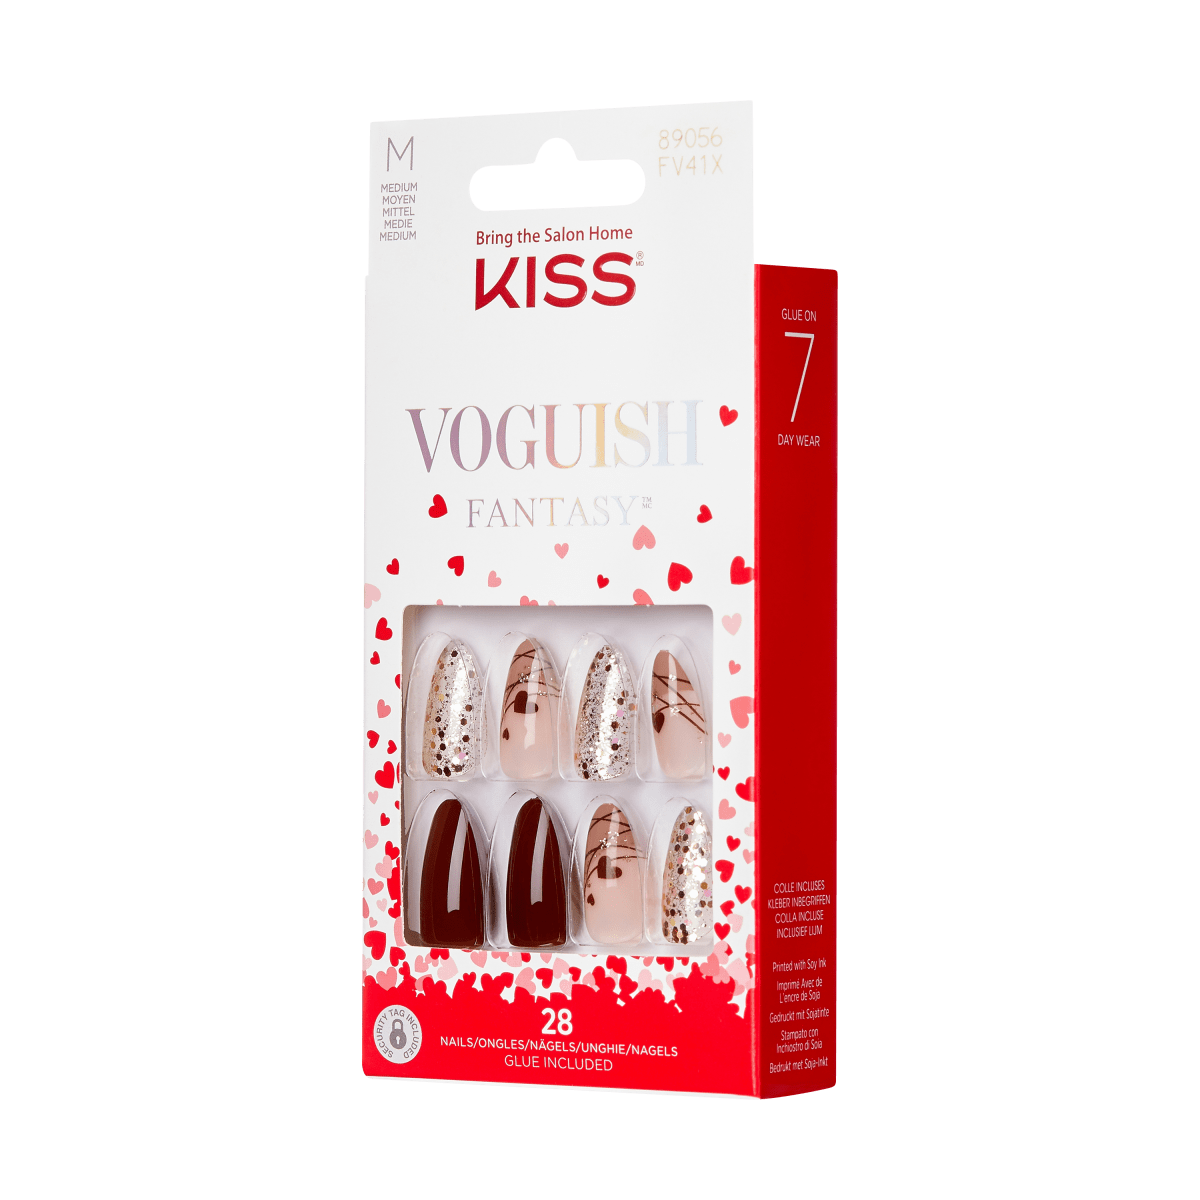 KISS Voguish Fantasy Nails - Sweet and Sour